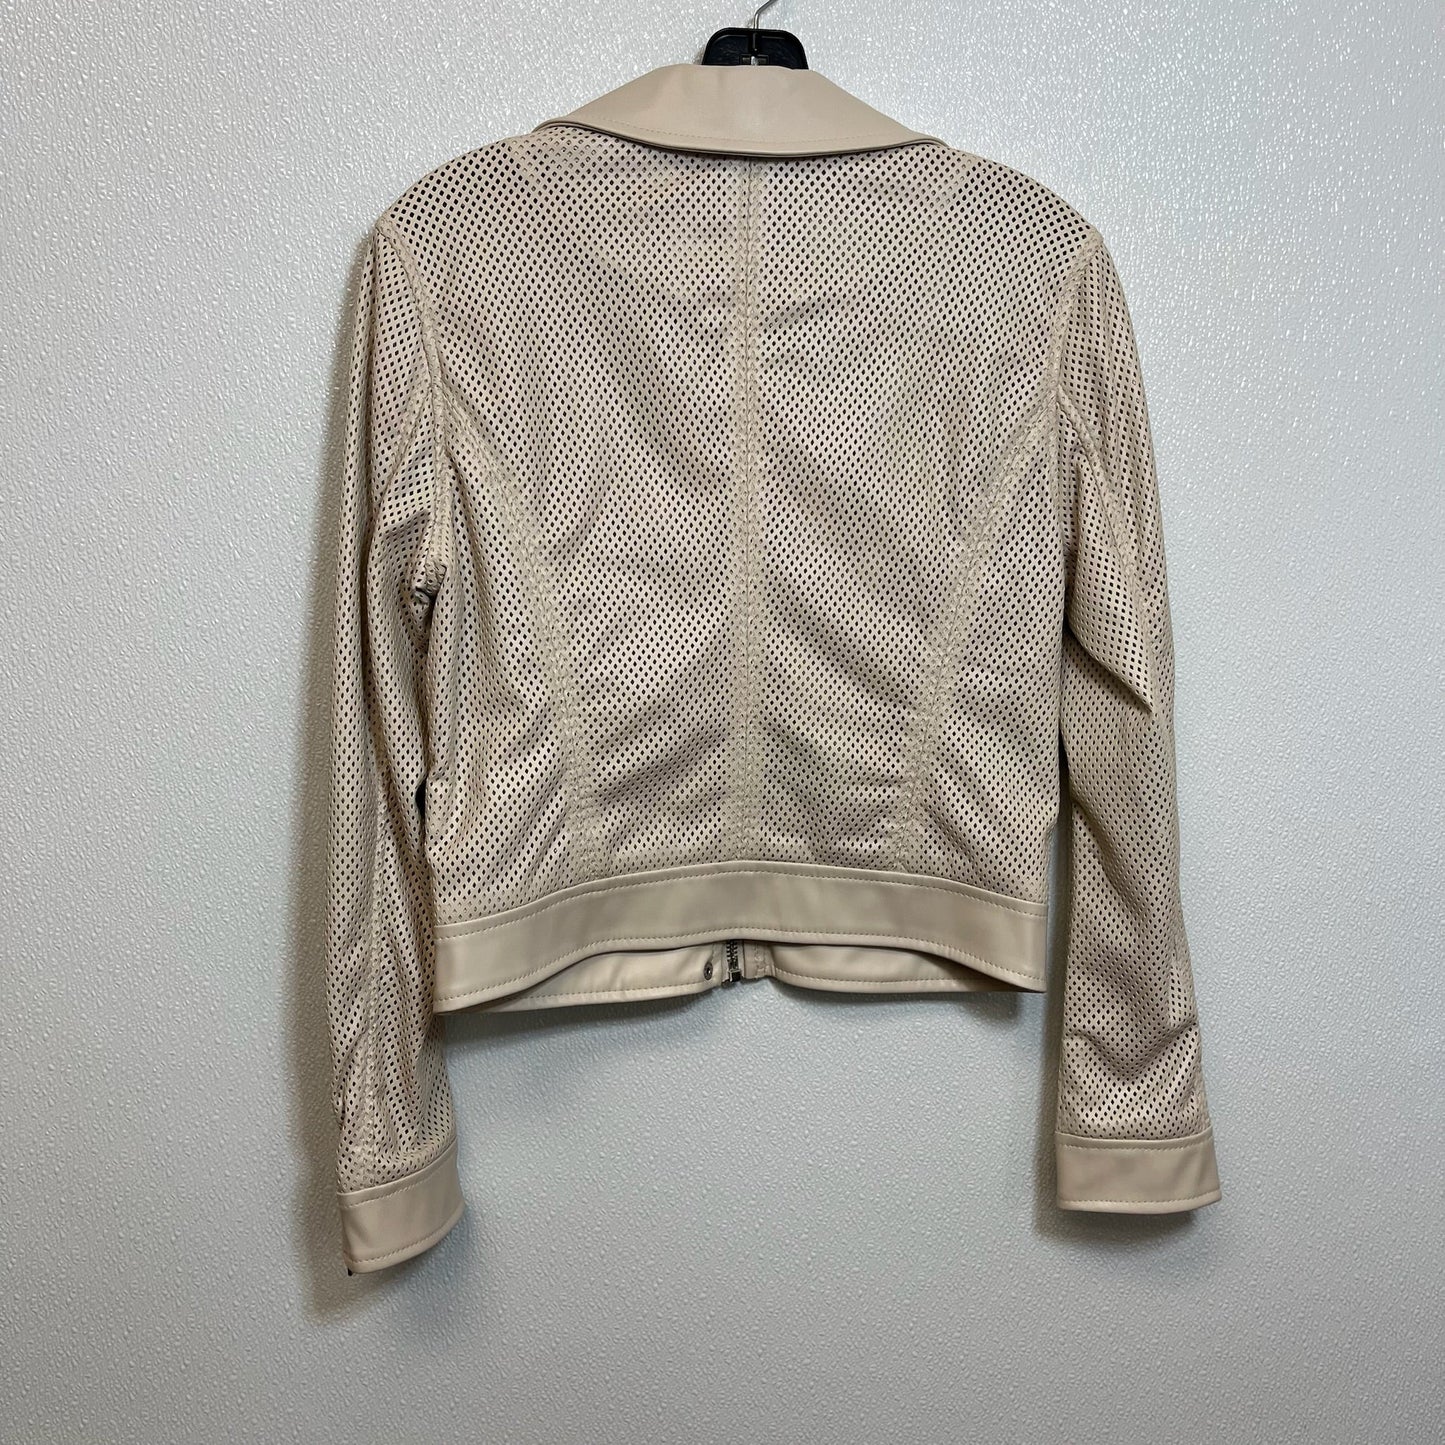 Jacket Other By Blanknyc  Size: Xs